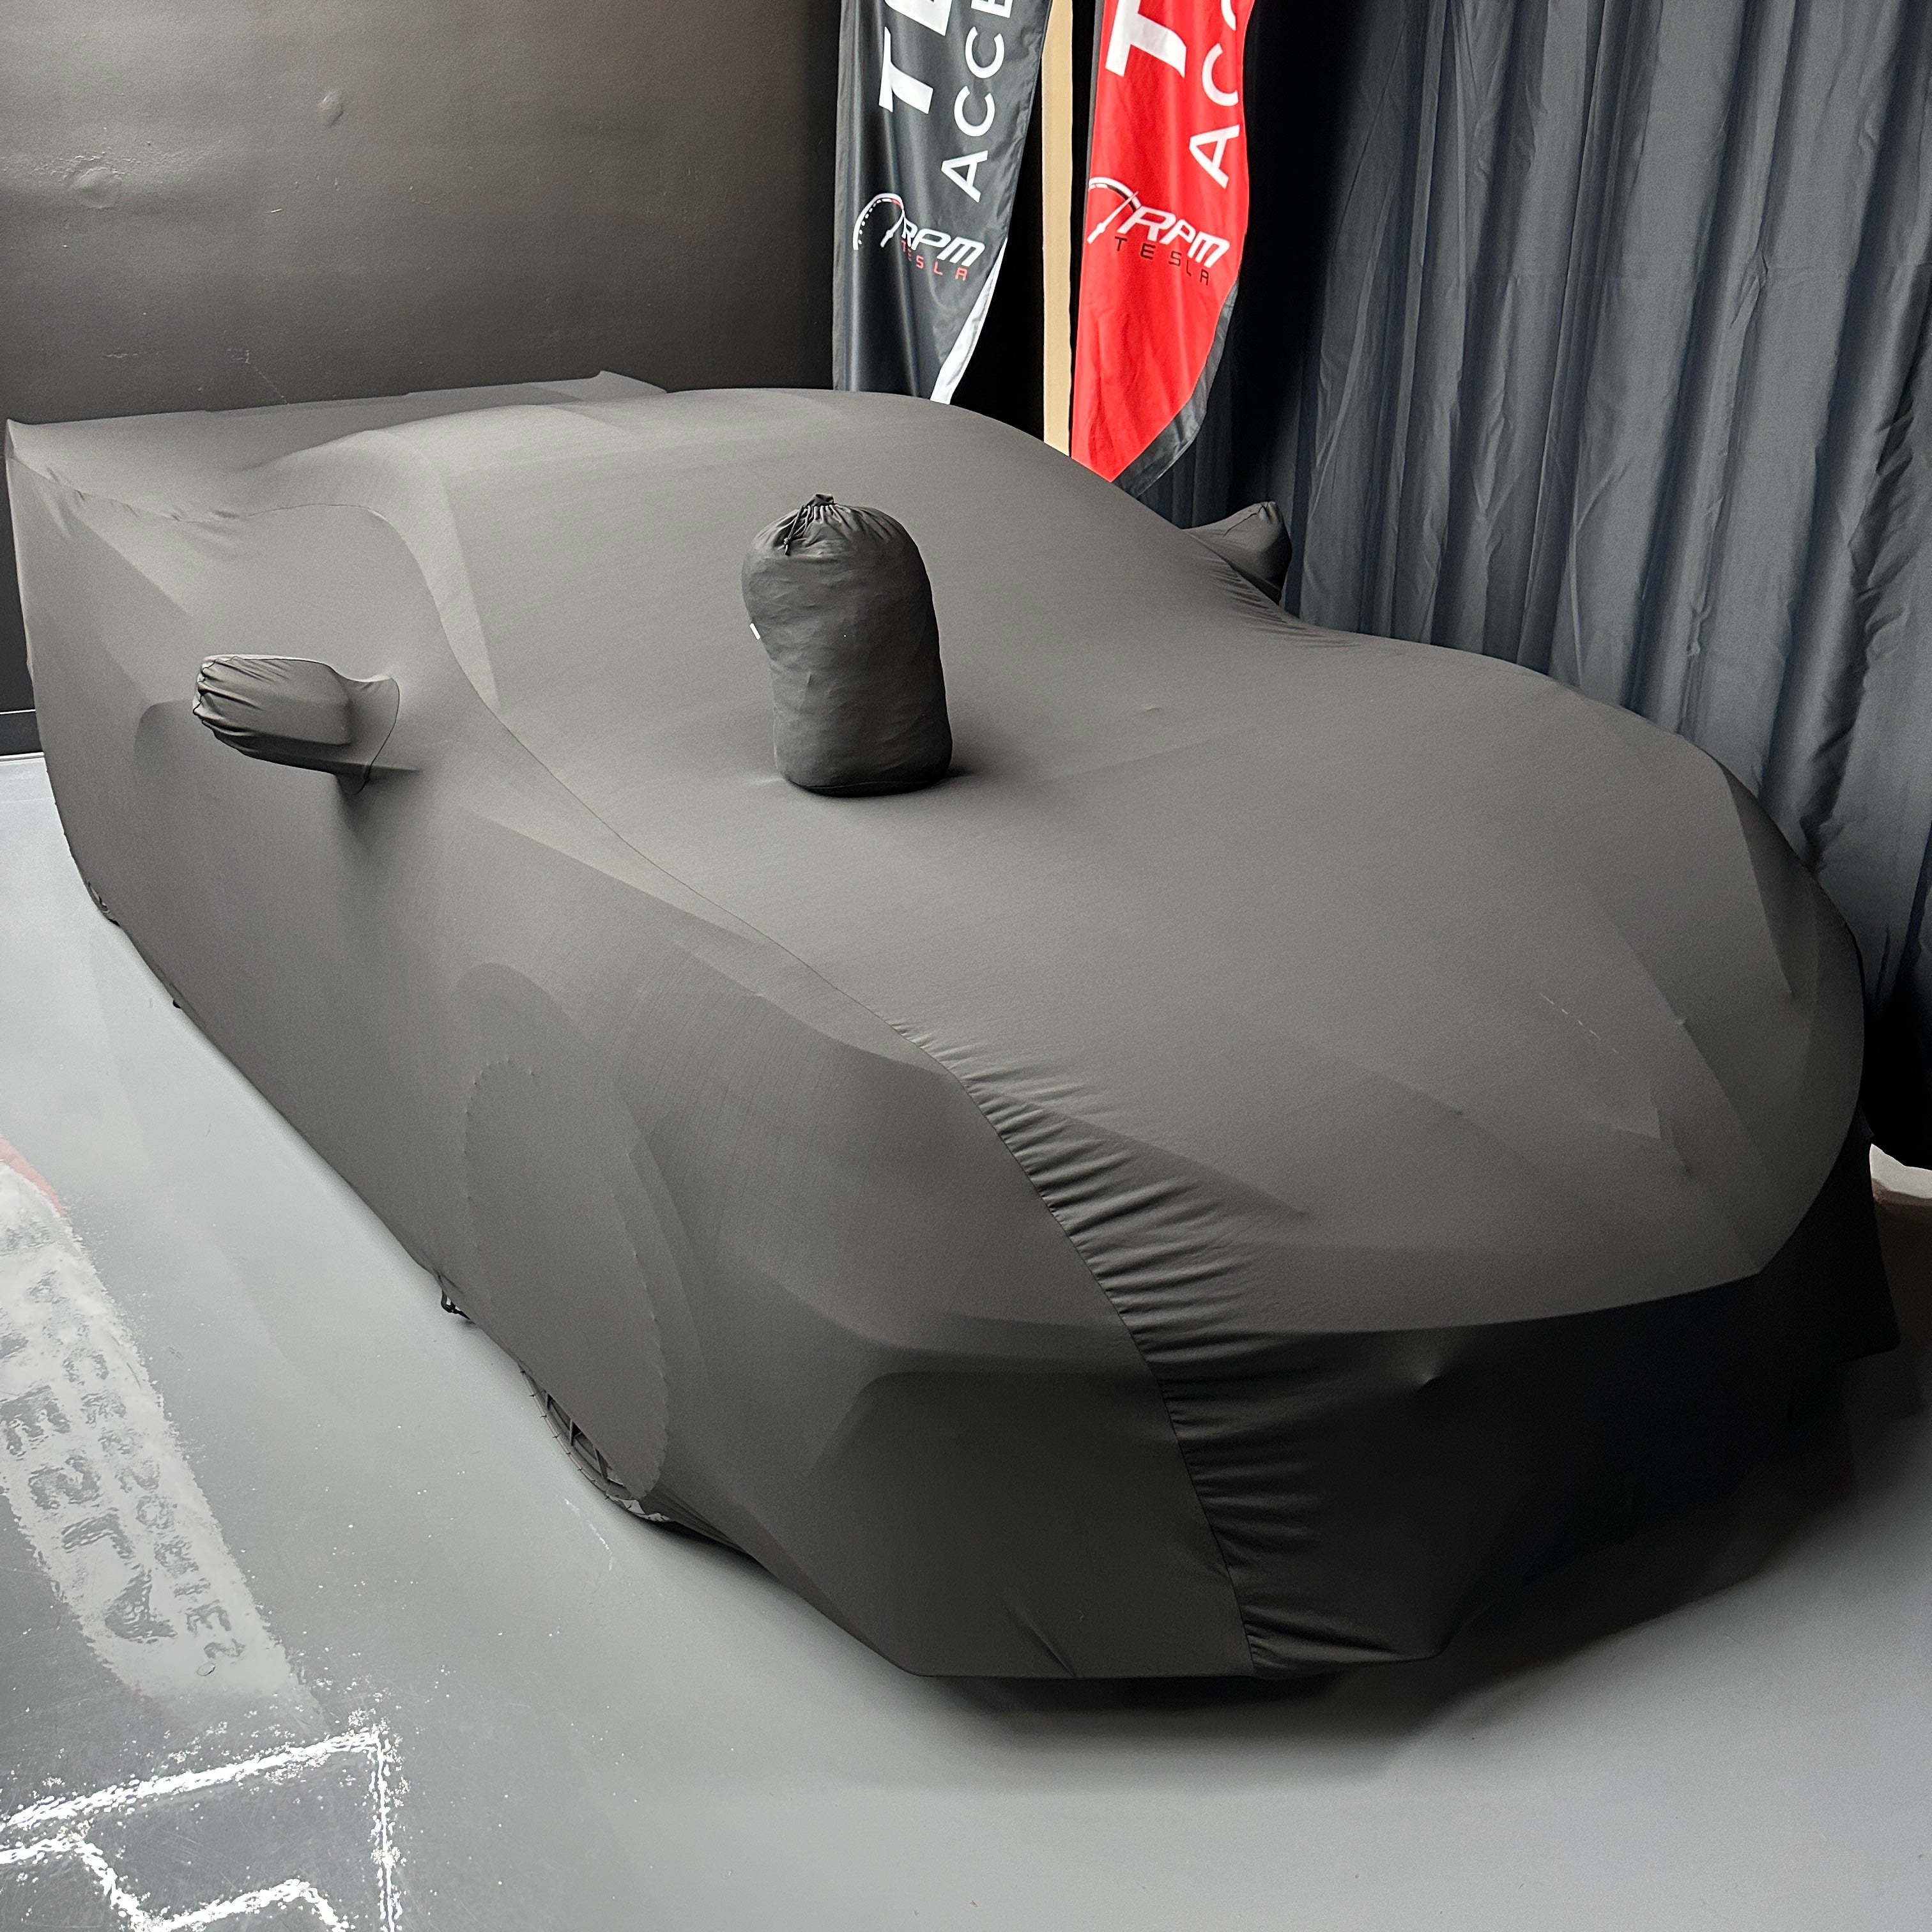 C8 Corvette Onyx Black Satin Stretch Indoor Cover – RPMCORVETTE